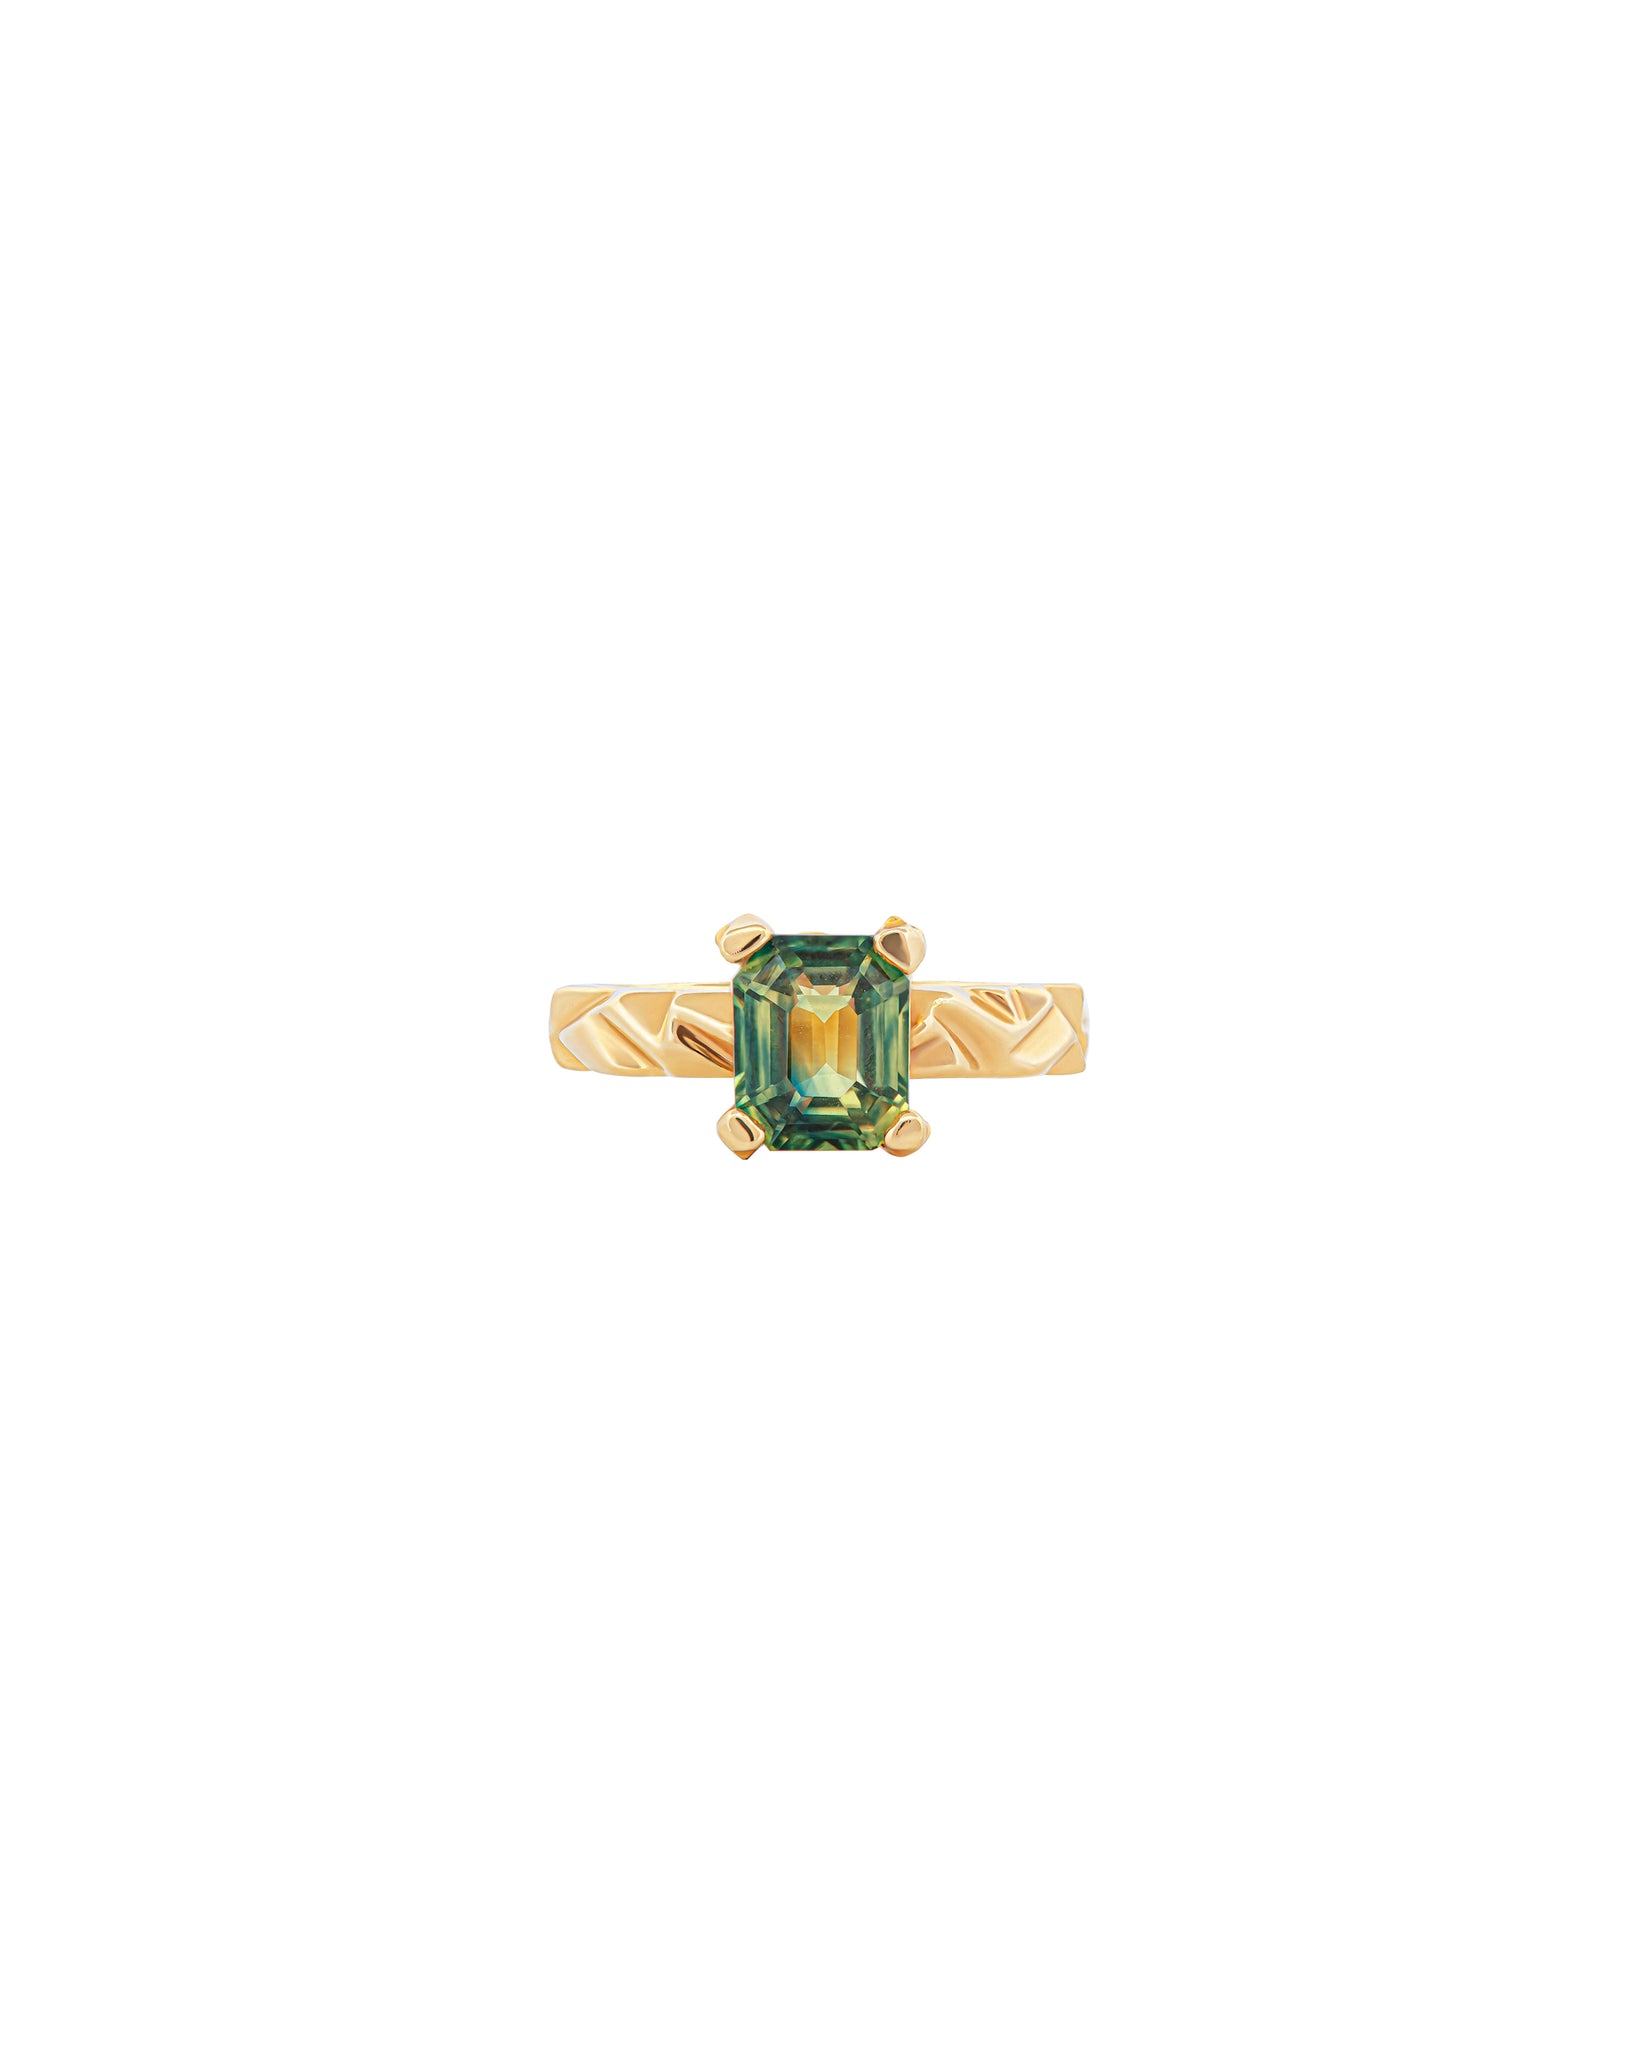 MIRROR Gemstone 18K Teal Sapphire Ring